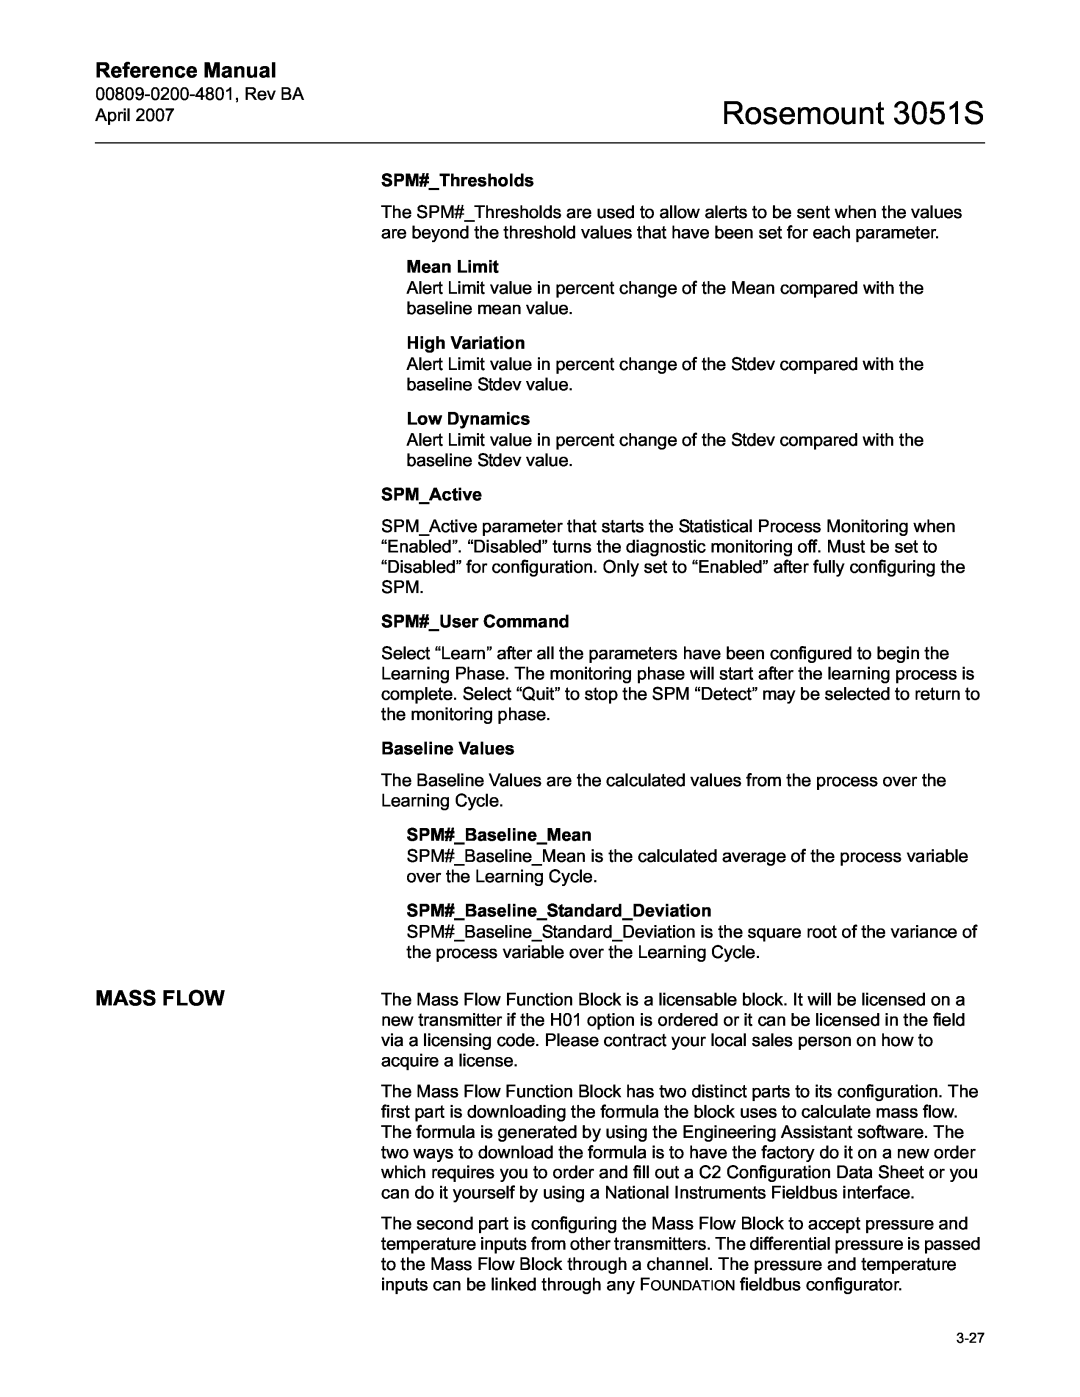 Emerson manual Mass Flow, Rosemount 3051S, Reference Manual 